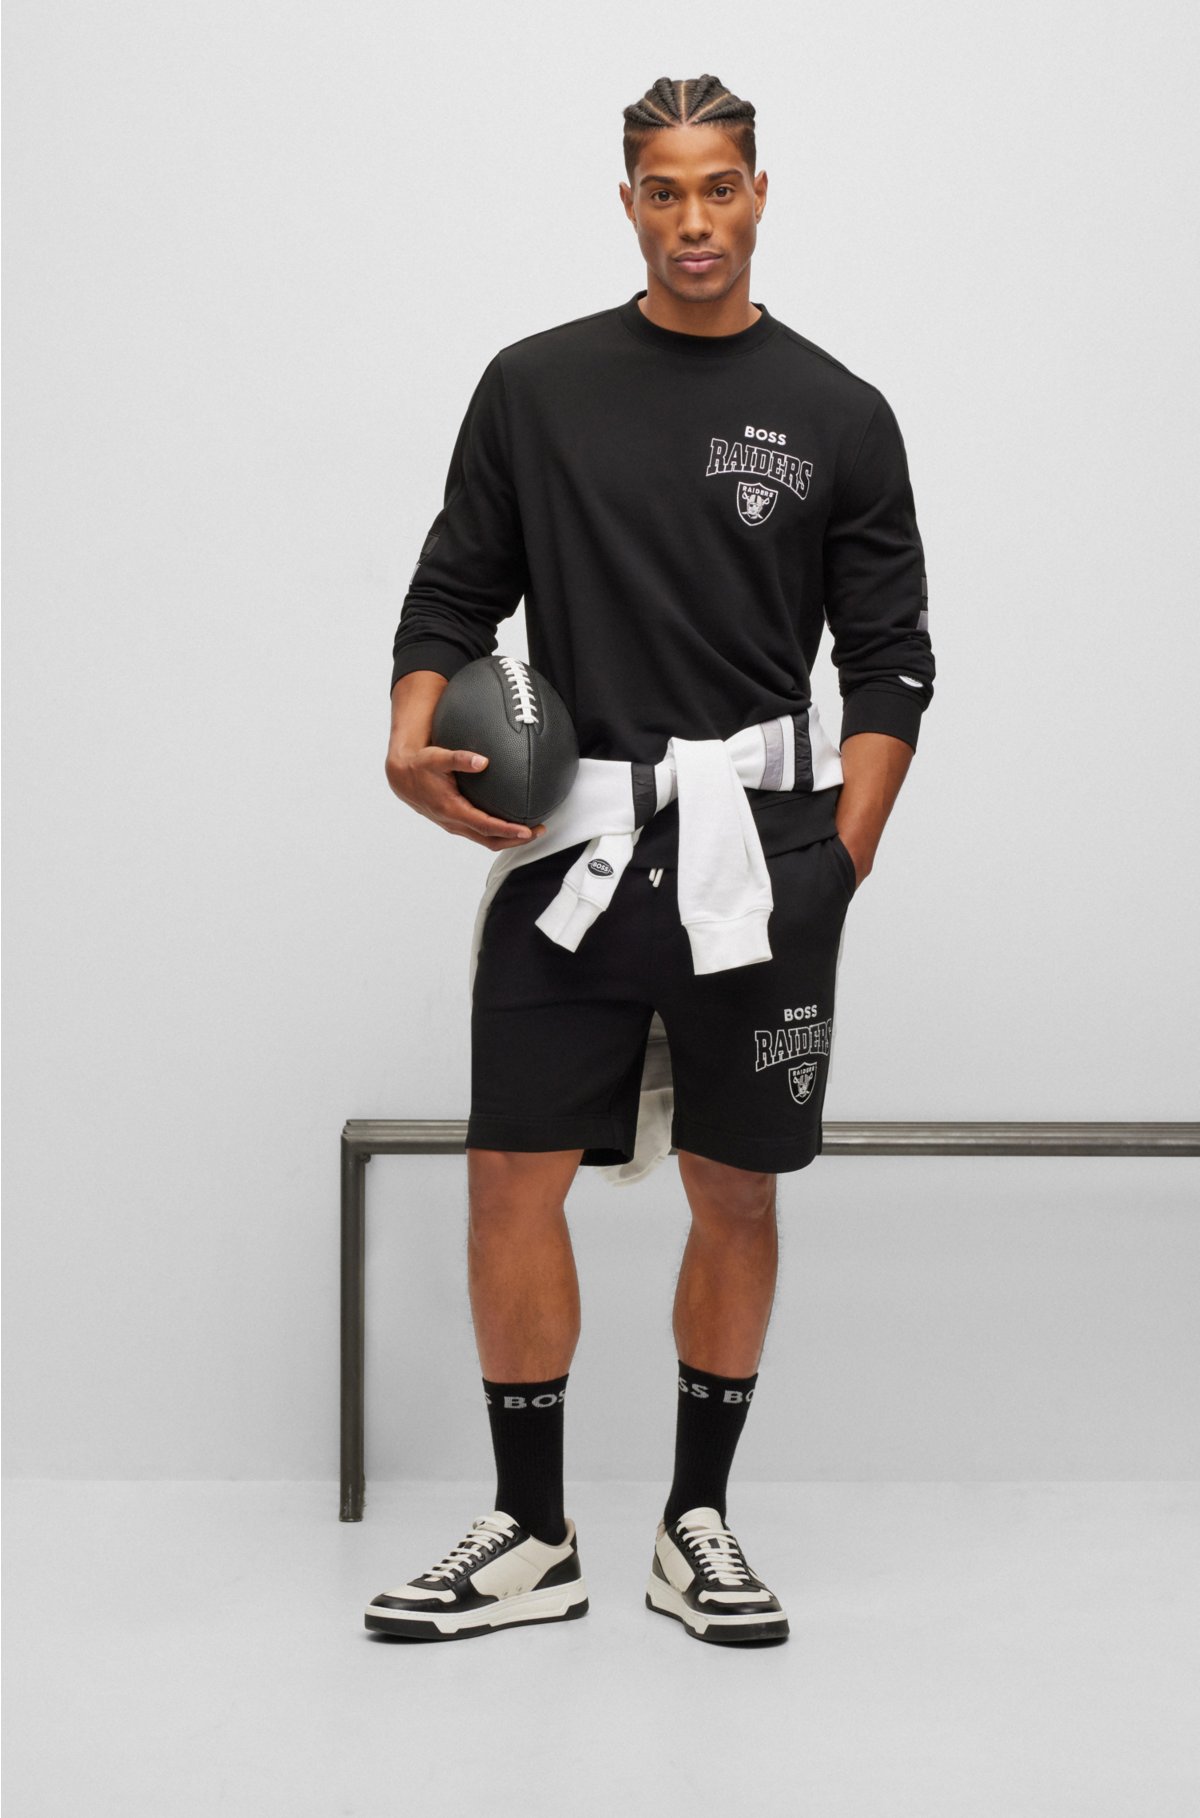 BOSS x NFL cotton-terry sweatshirt with collaborative branding, Raiders